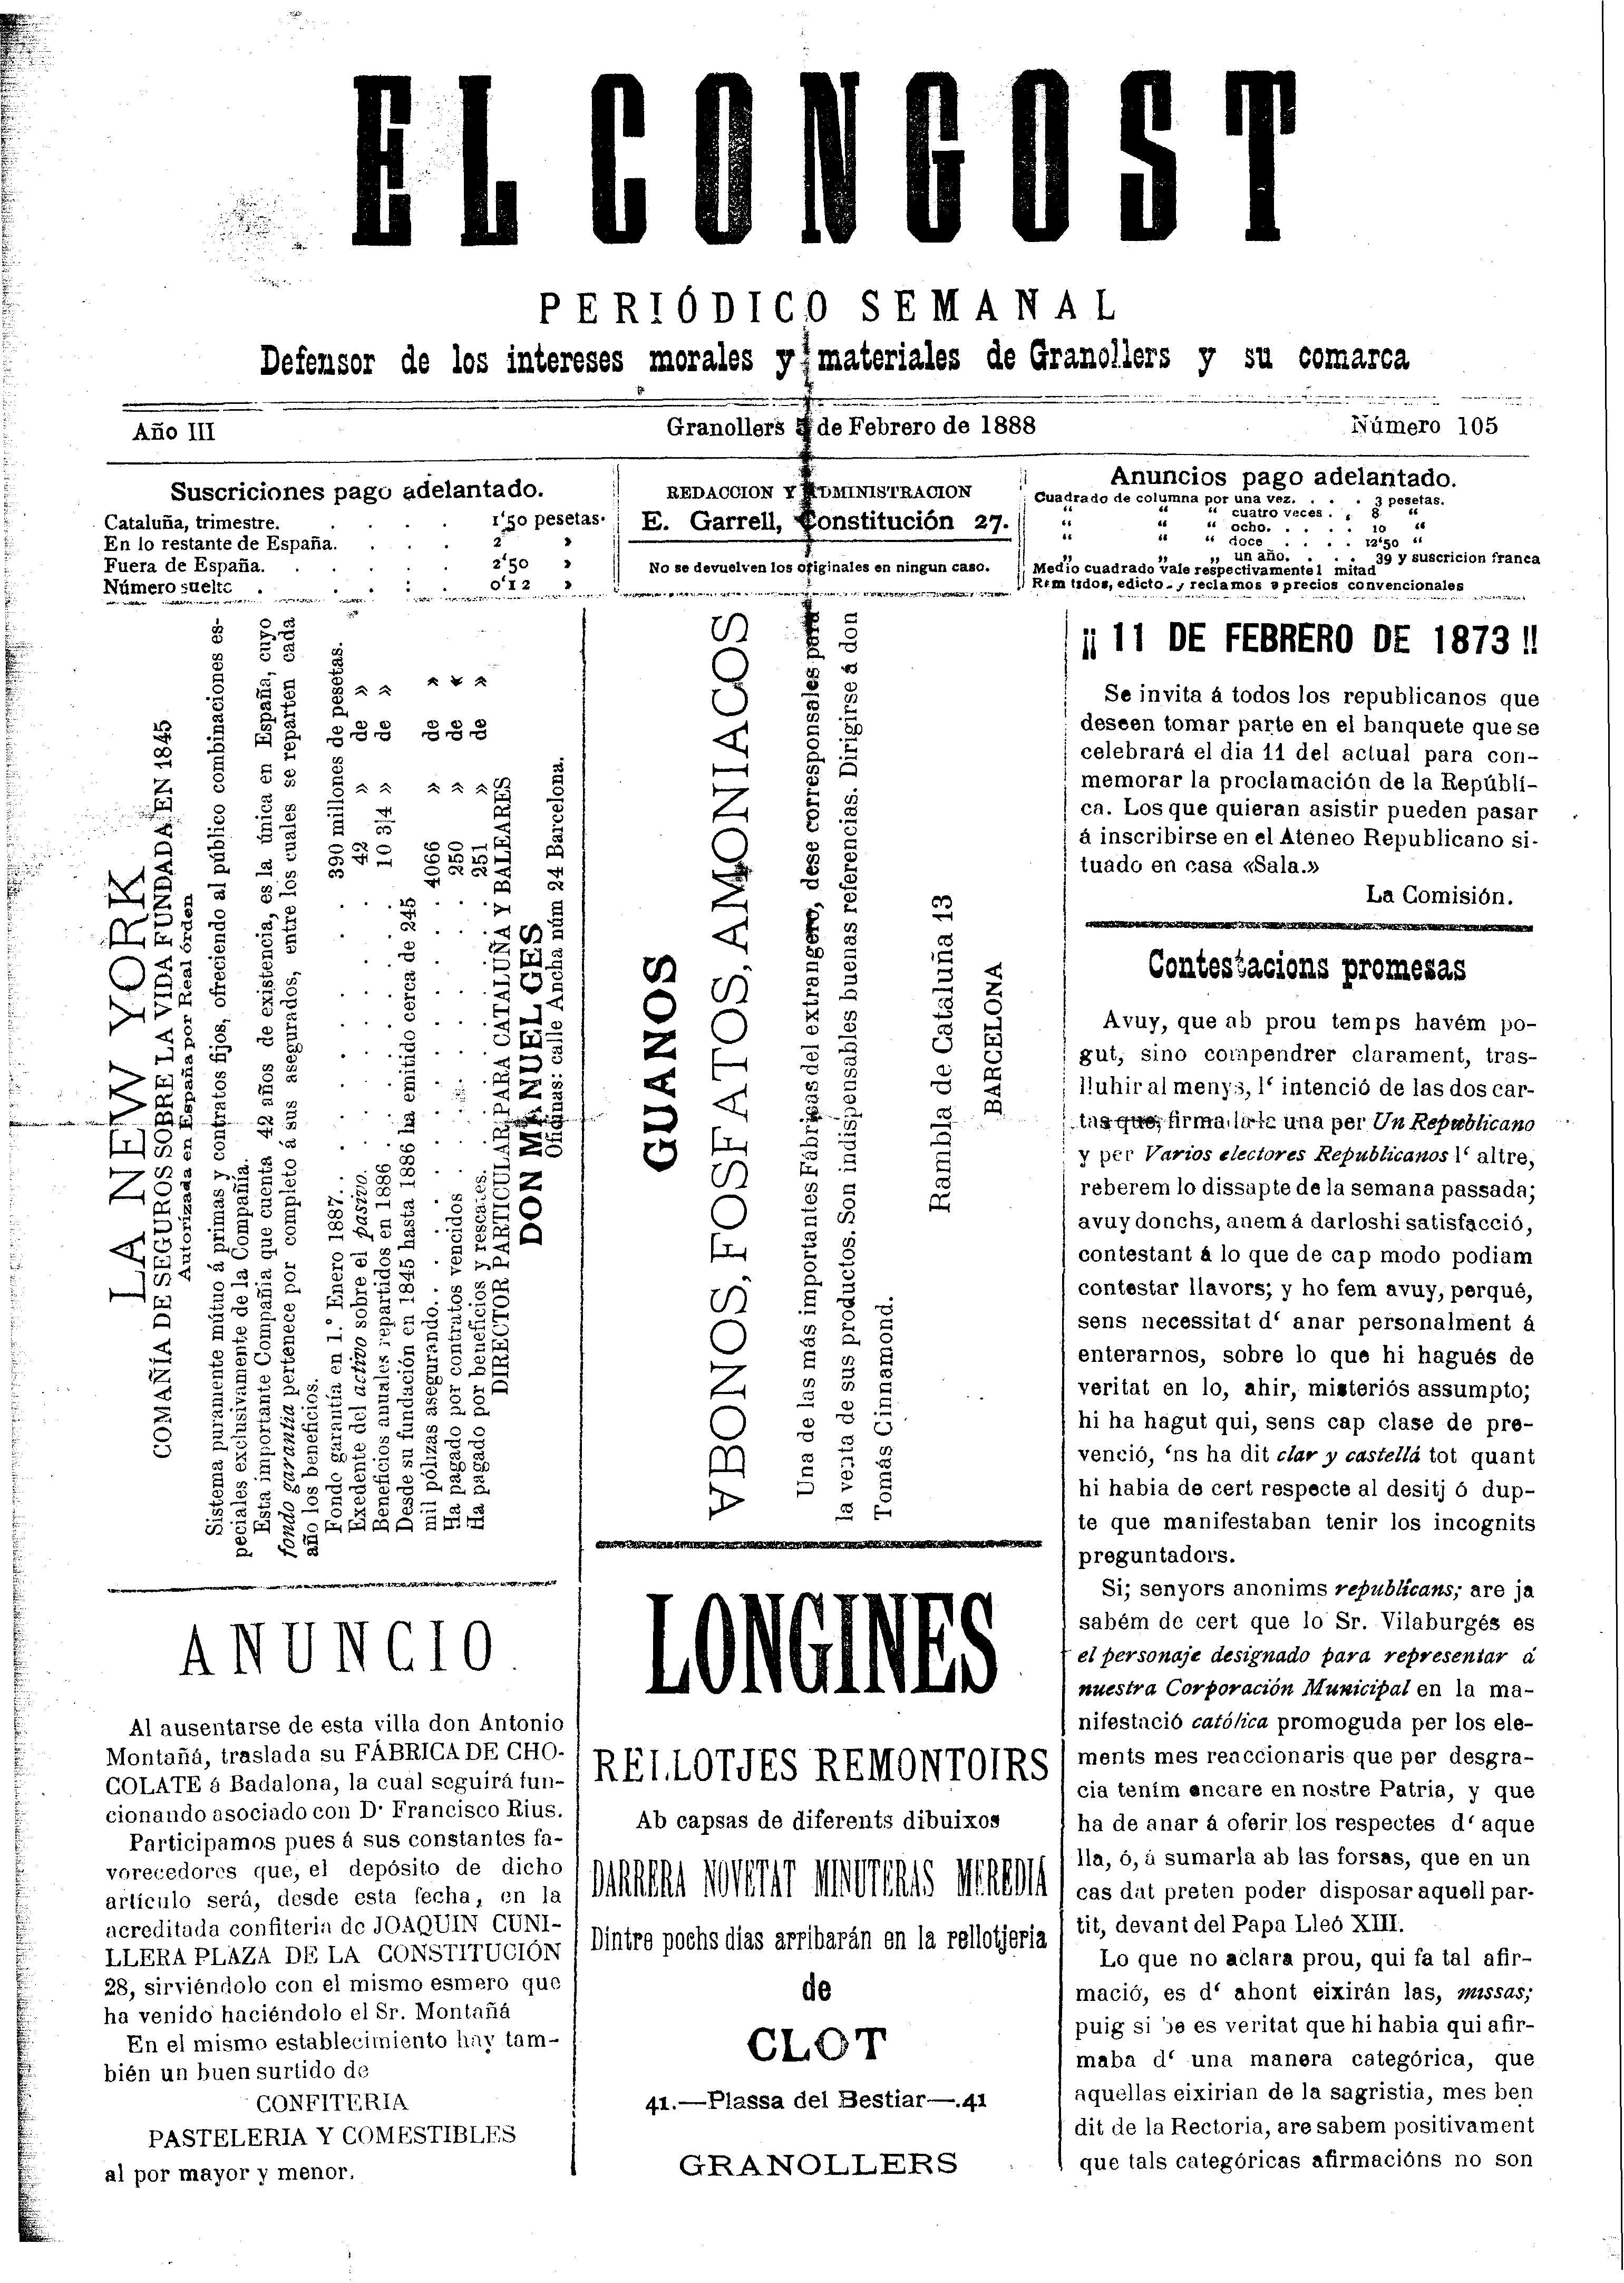 El Congost, 5/2/1888 [Ejemplar]